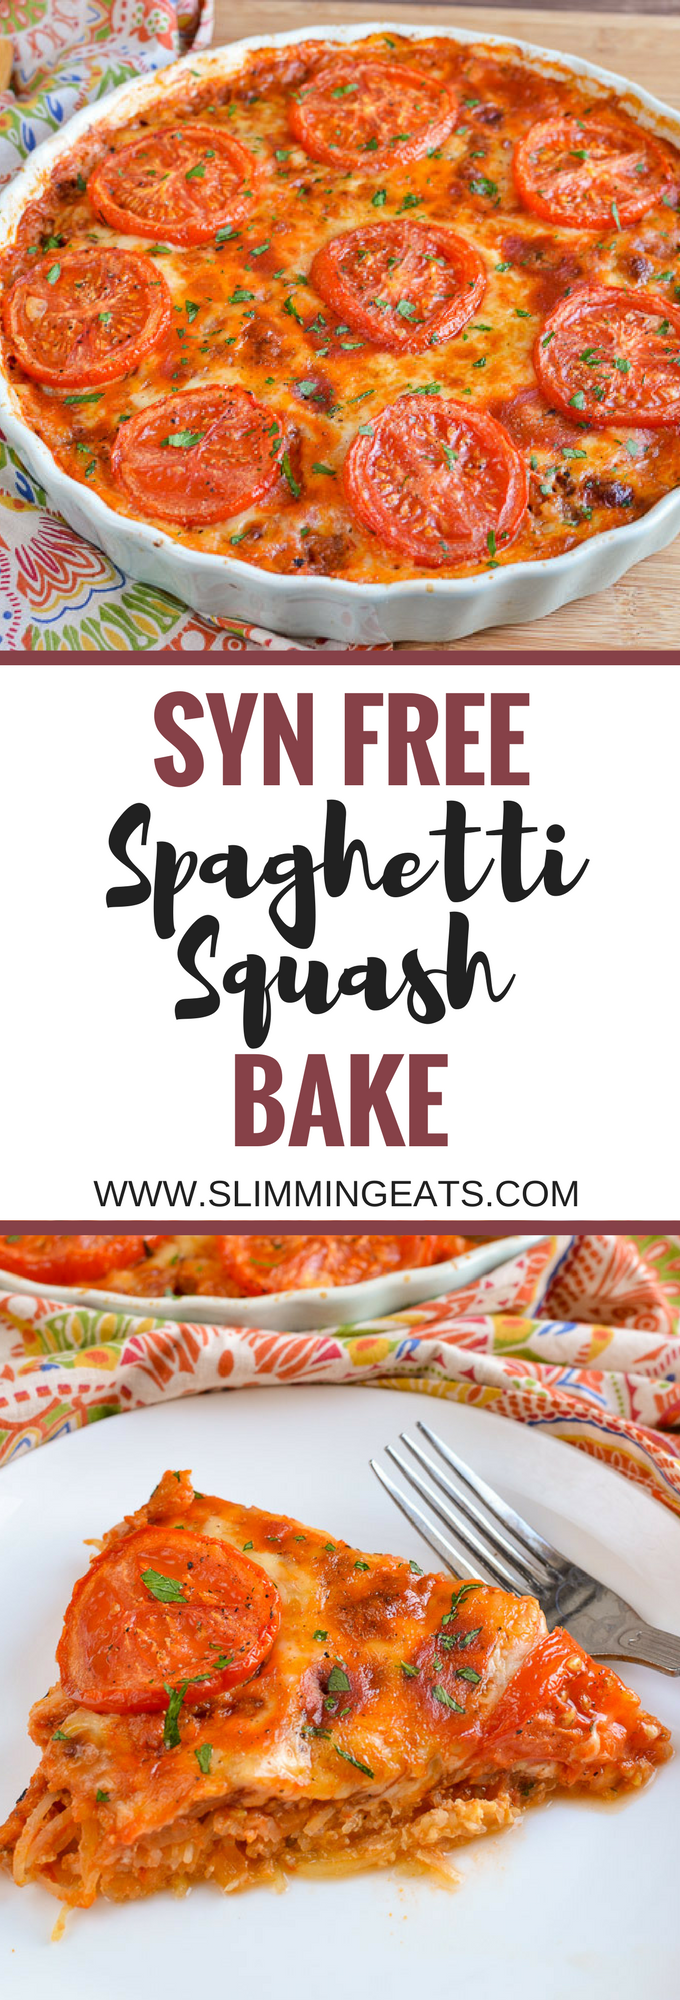 Slimming Eats Syn Free Spaghetti Squash Bake - gluten free, vegetarian, Slimming World and Weight Watchers friendly